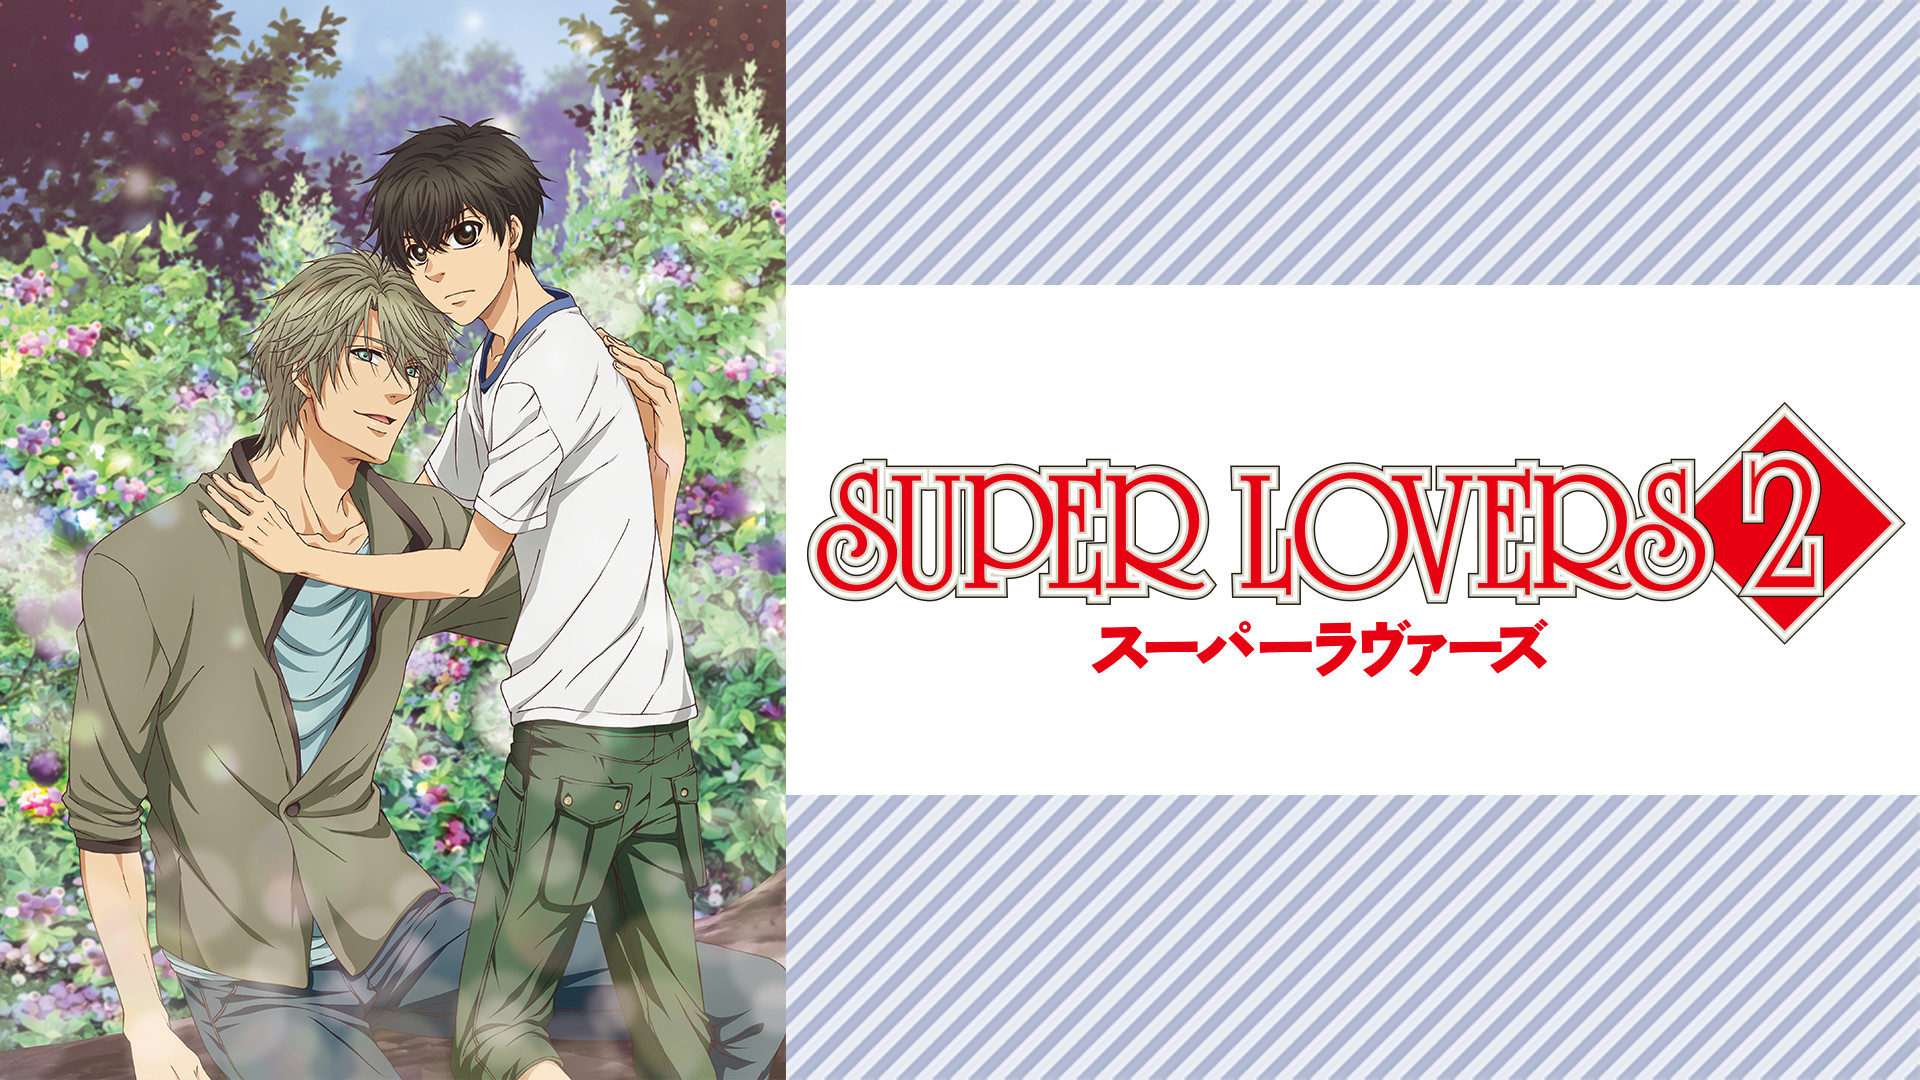 SUPER LOVERS 2 | アニメ動画見放題 | dアニメストア